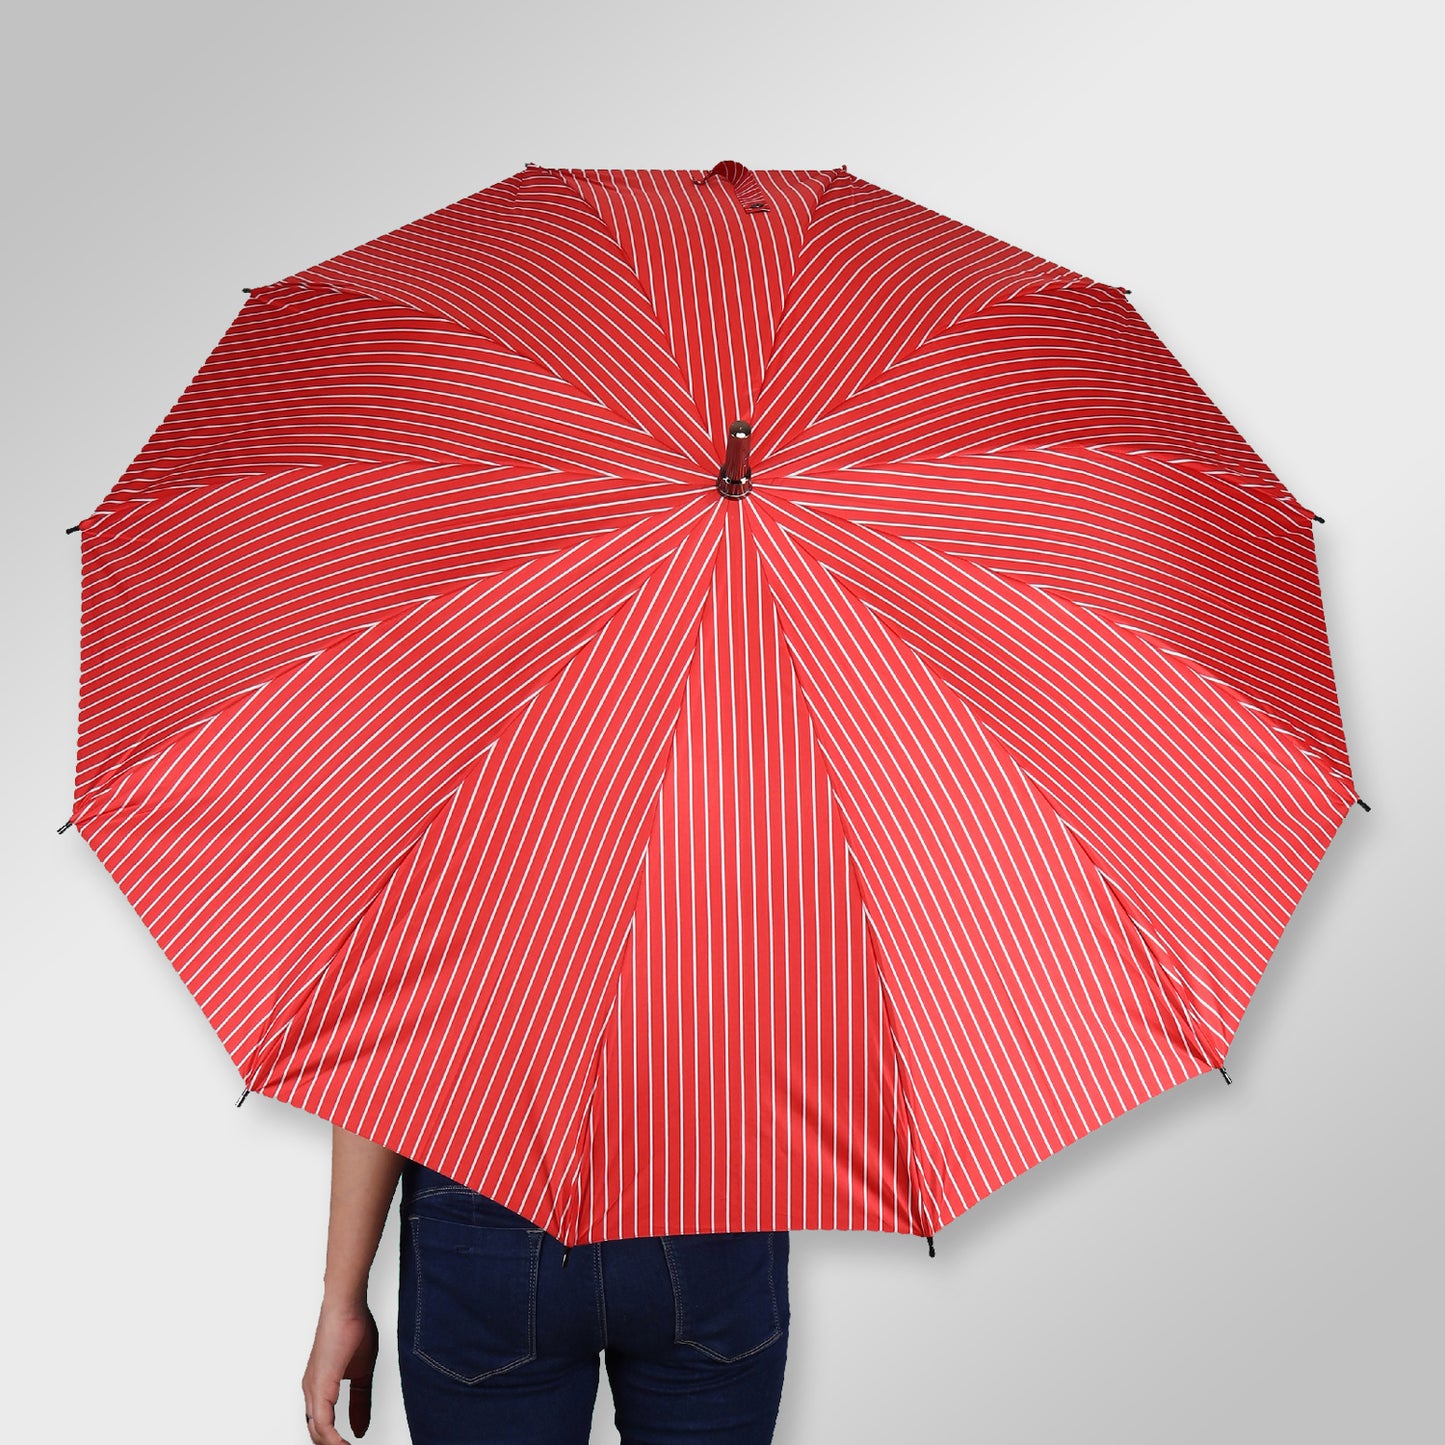 SUMMER | Automatic Open Fashion Umbrella - Red